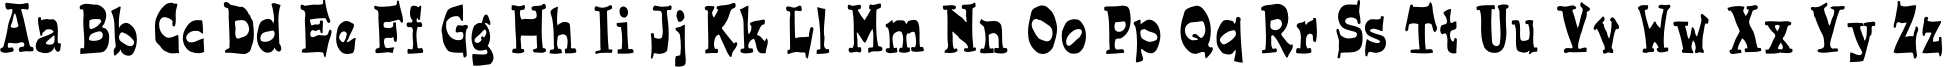 Пример написания английского алфавита шрифтом FunkyWestern